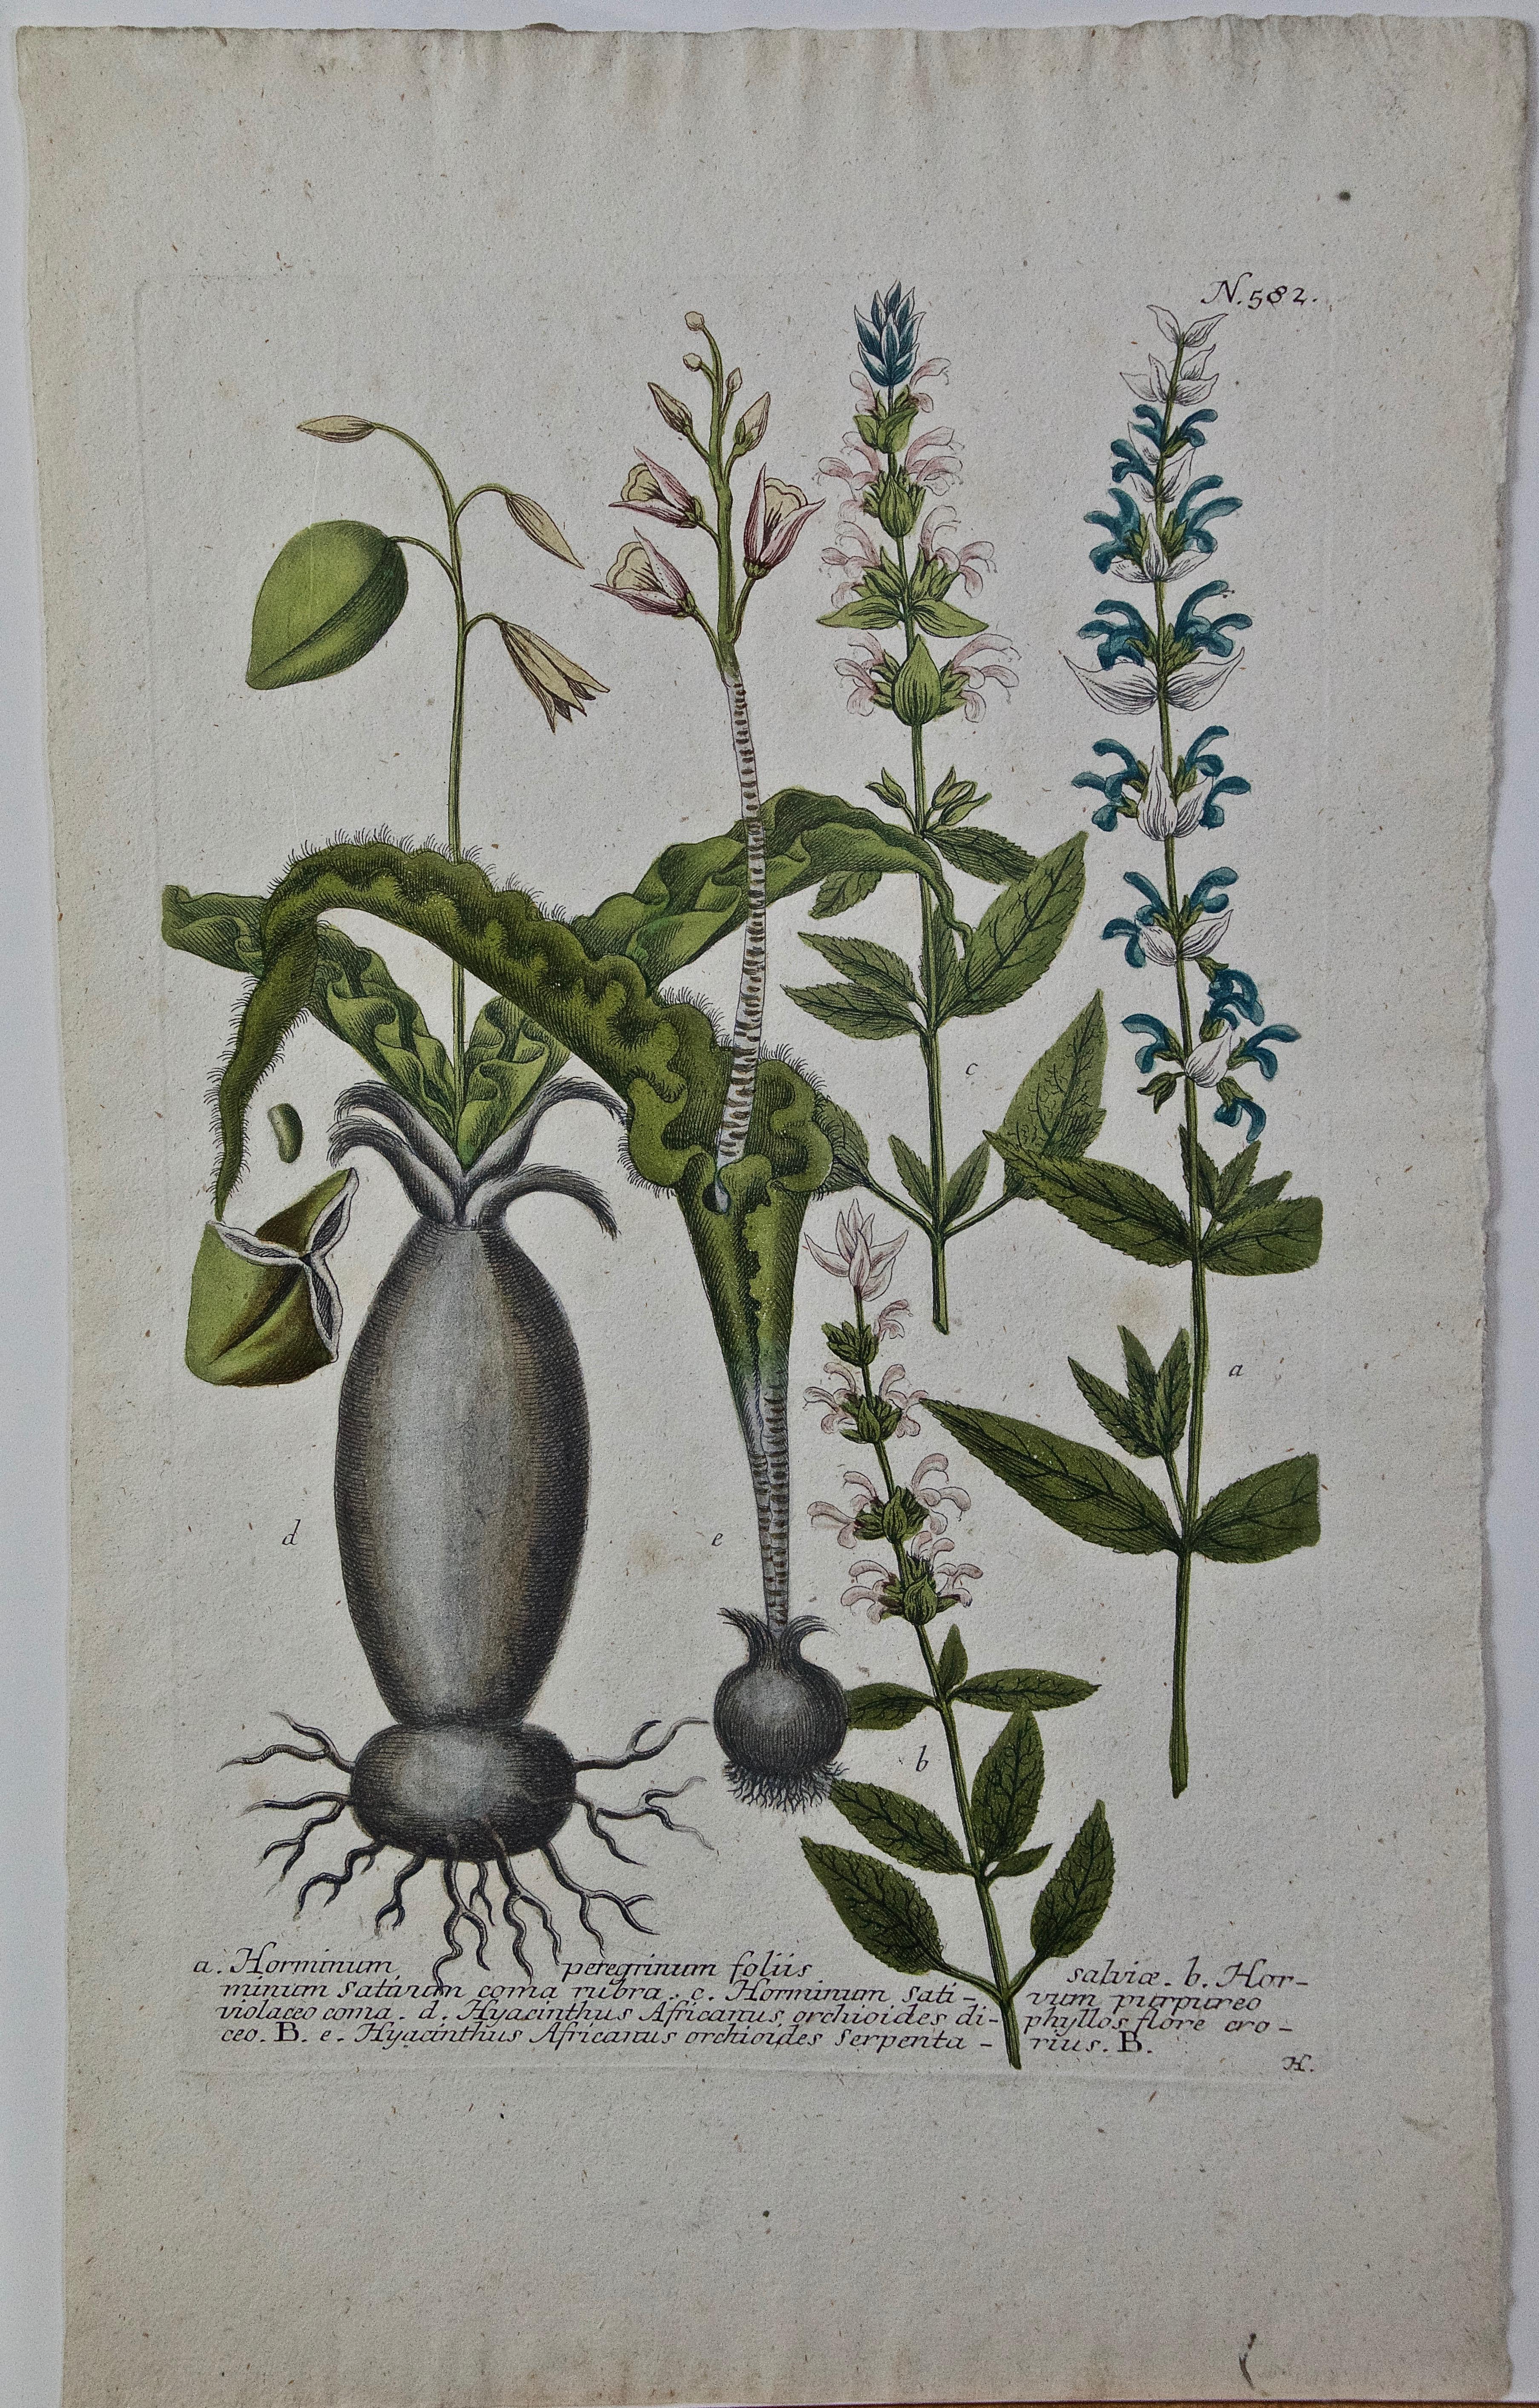 Weinmann, handkolorierte botanische Gravur „"Pelgrinum" aus Aluminium, 18. Jahrhundert